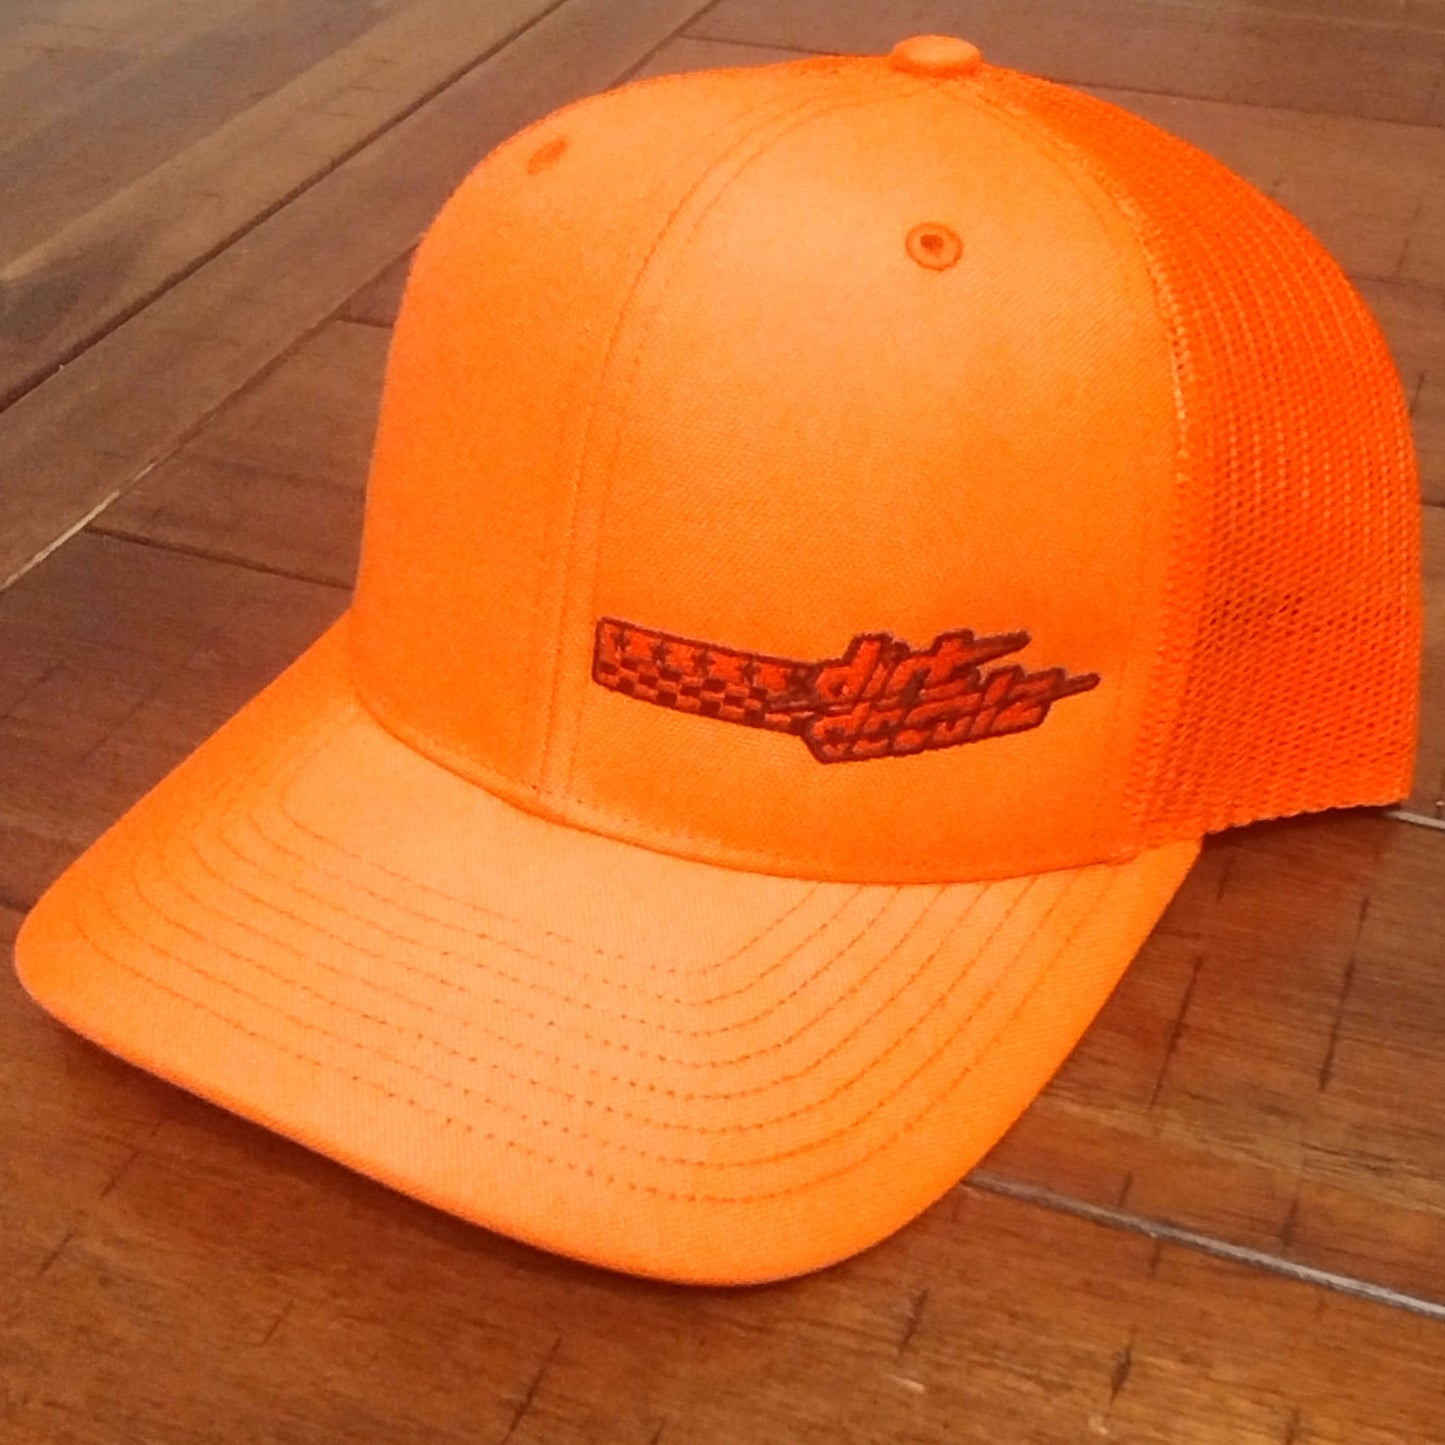 '23 Hat - Hunter Orange